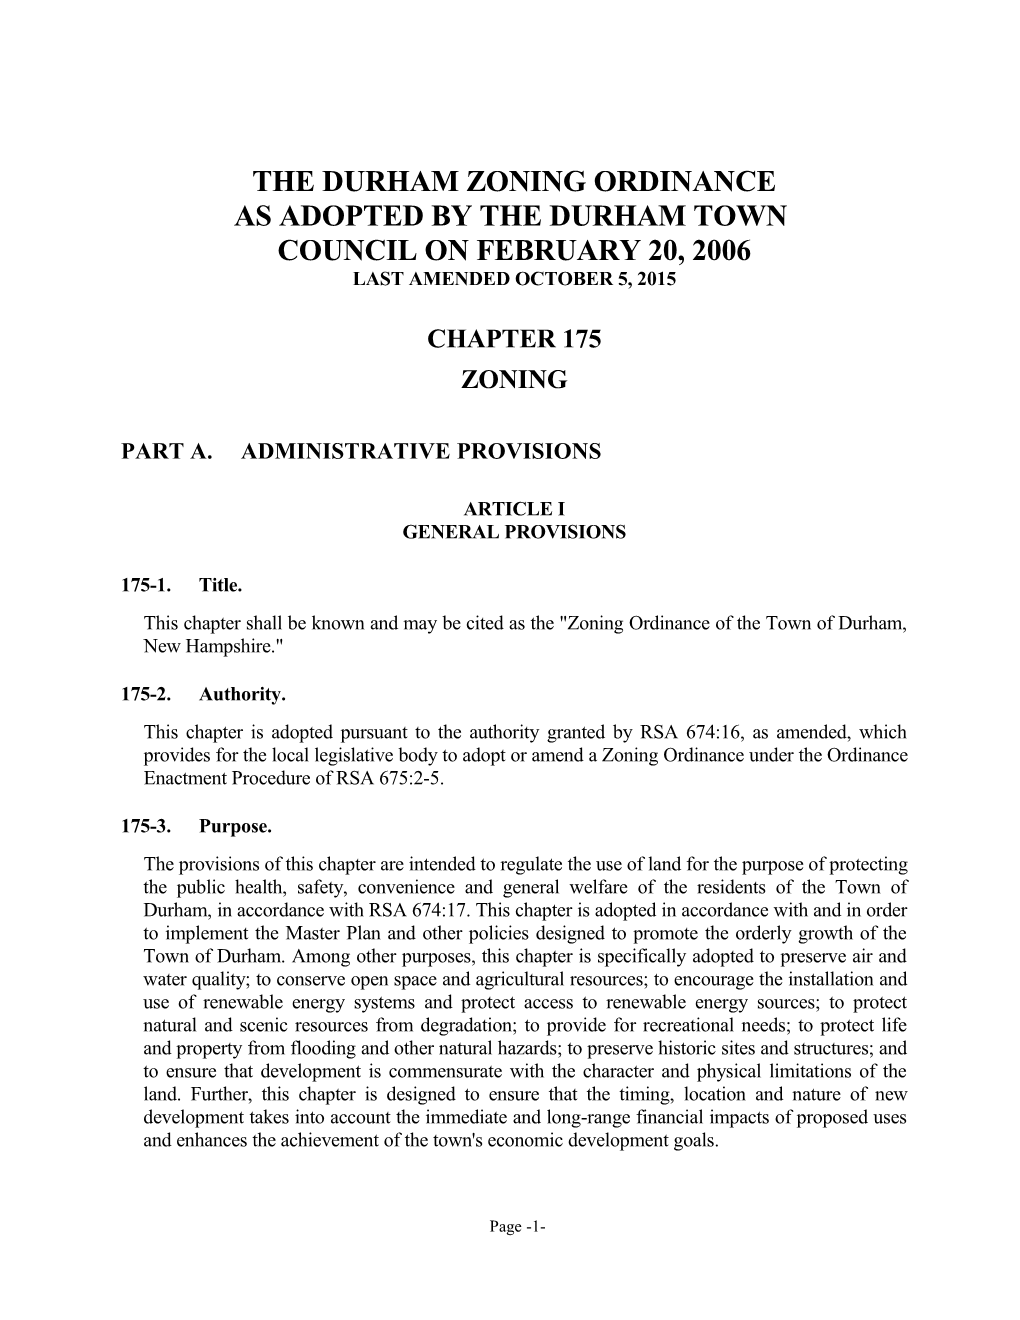 The Durham Zoning Ordinance